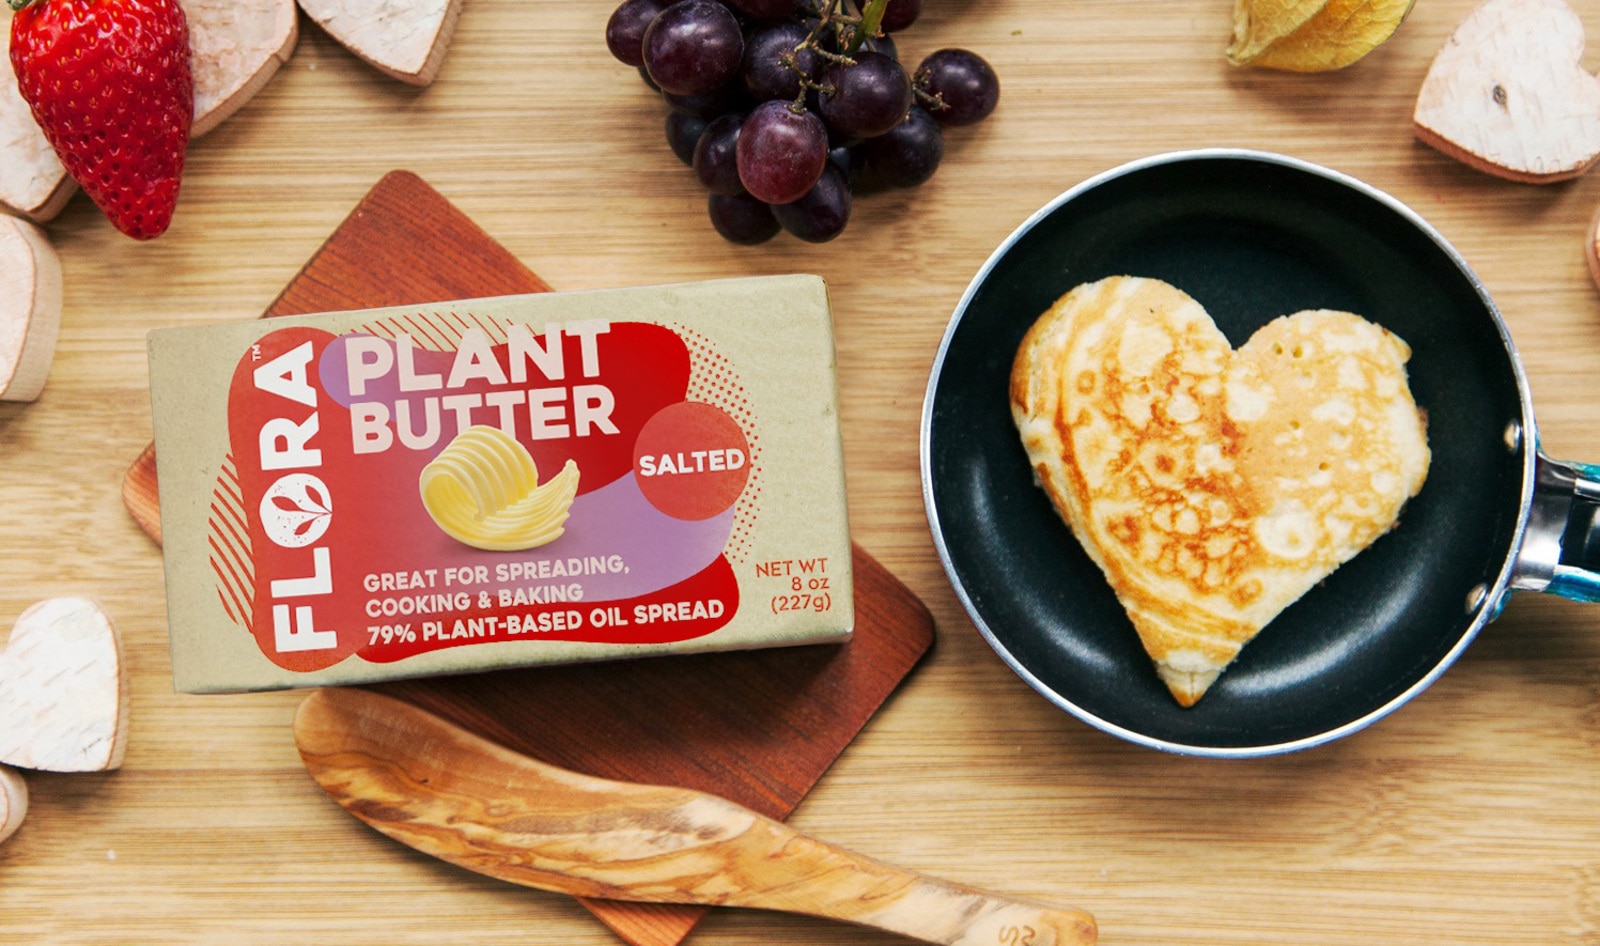 Premium Vegan Butter, in Plastic-Free Packaging, Coming to Kroger for $3.49